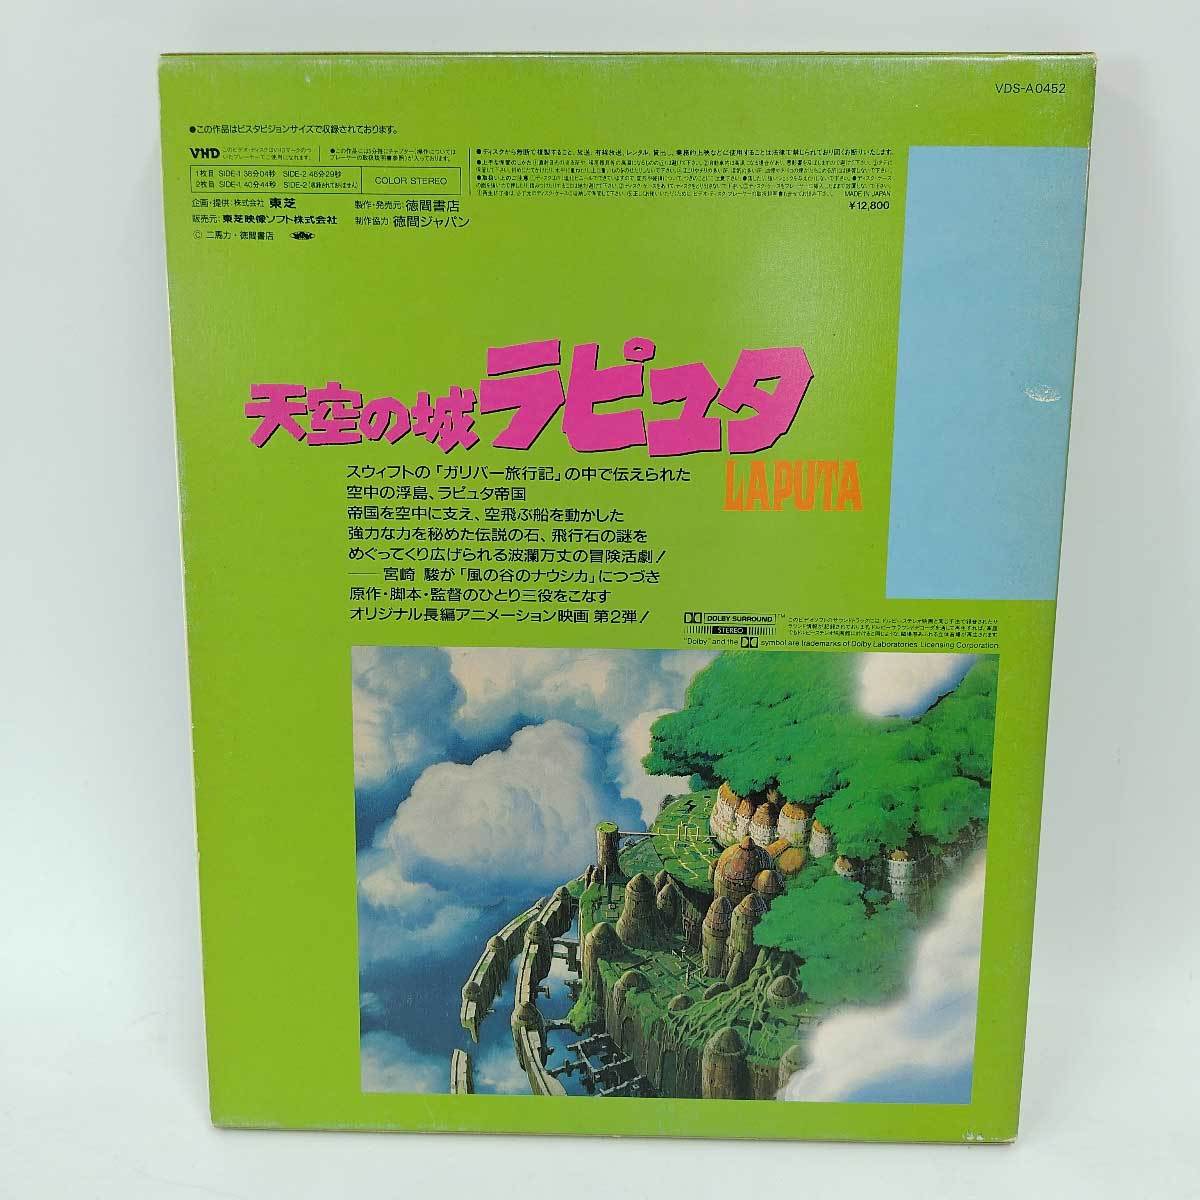 [ used ]VHD heaven empty. castle Laputa video disk 2 sheets set manual attaching TOSHIBA Toshiba Miyazaki .VDS-A0452 anime Ghibli 